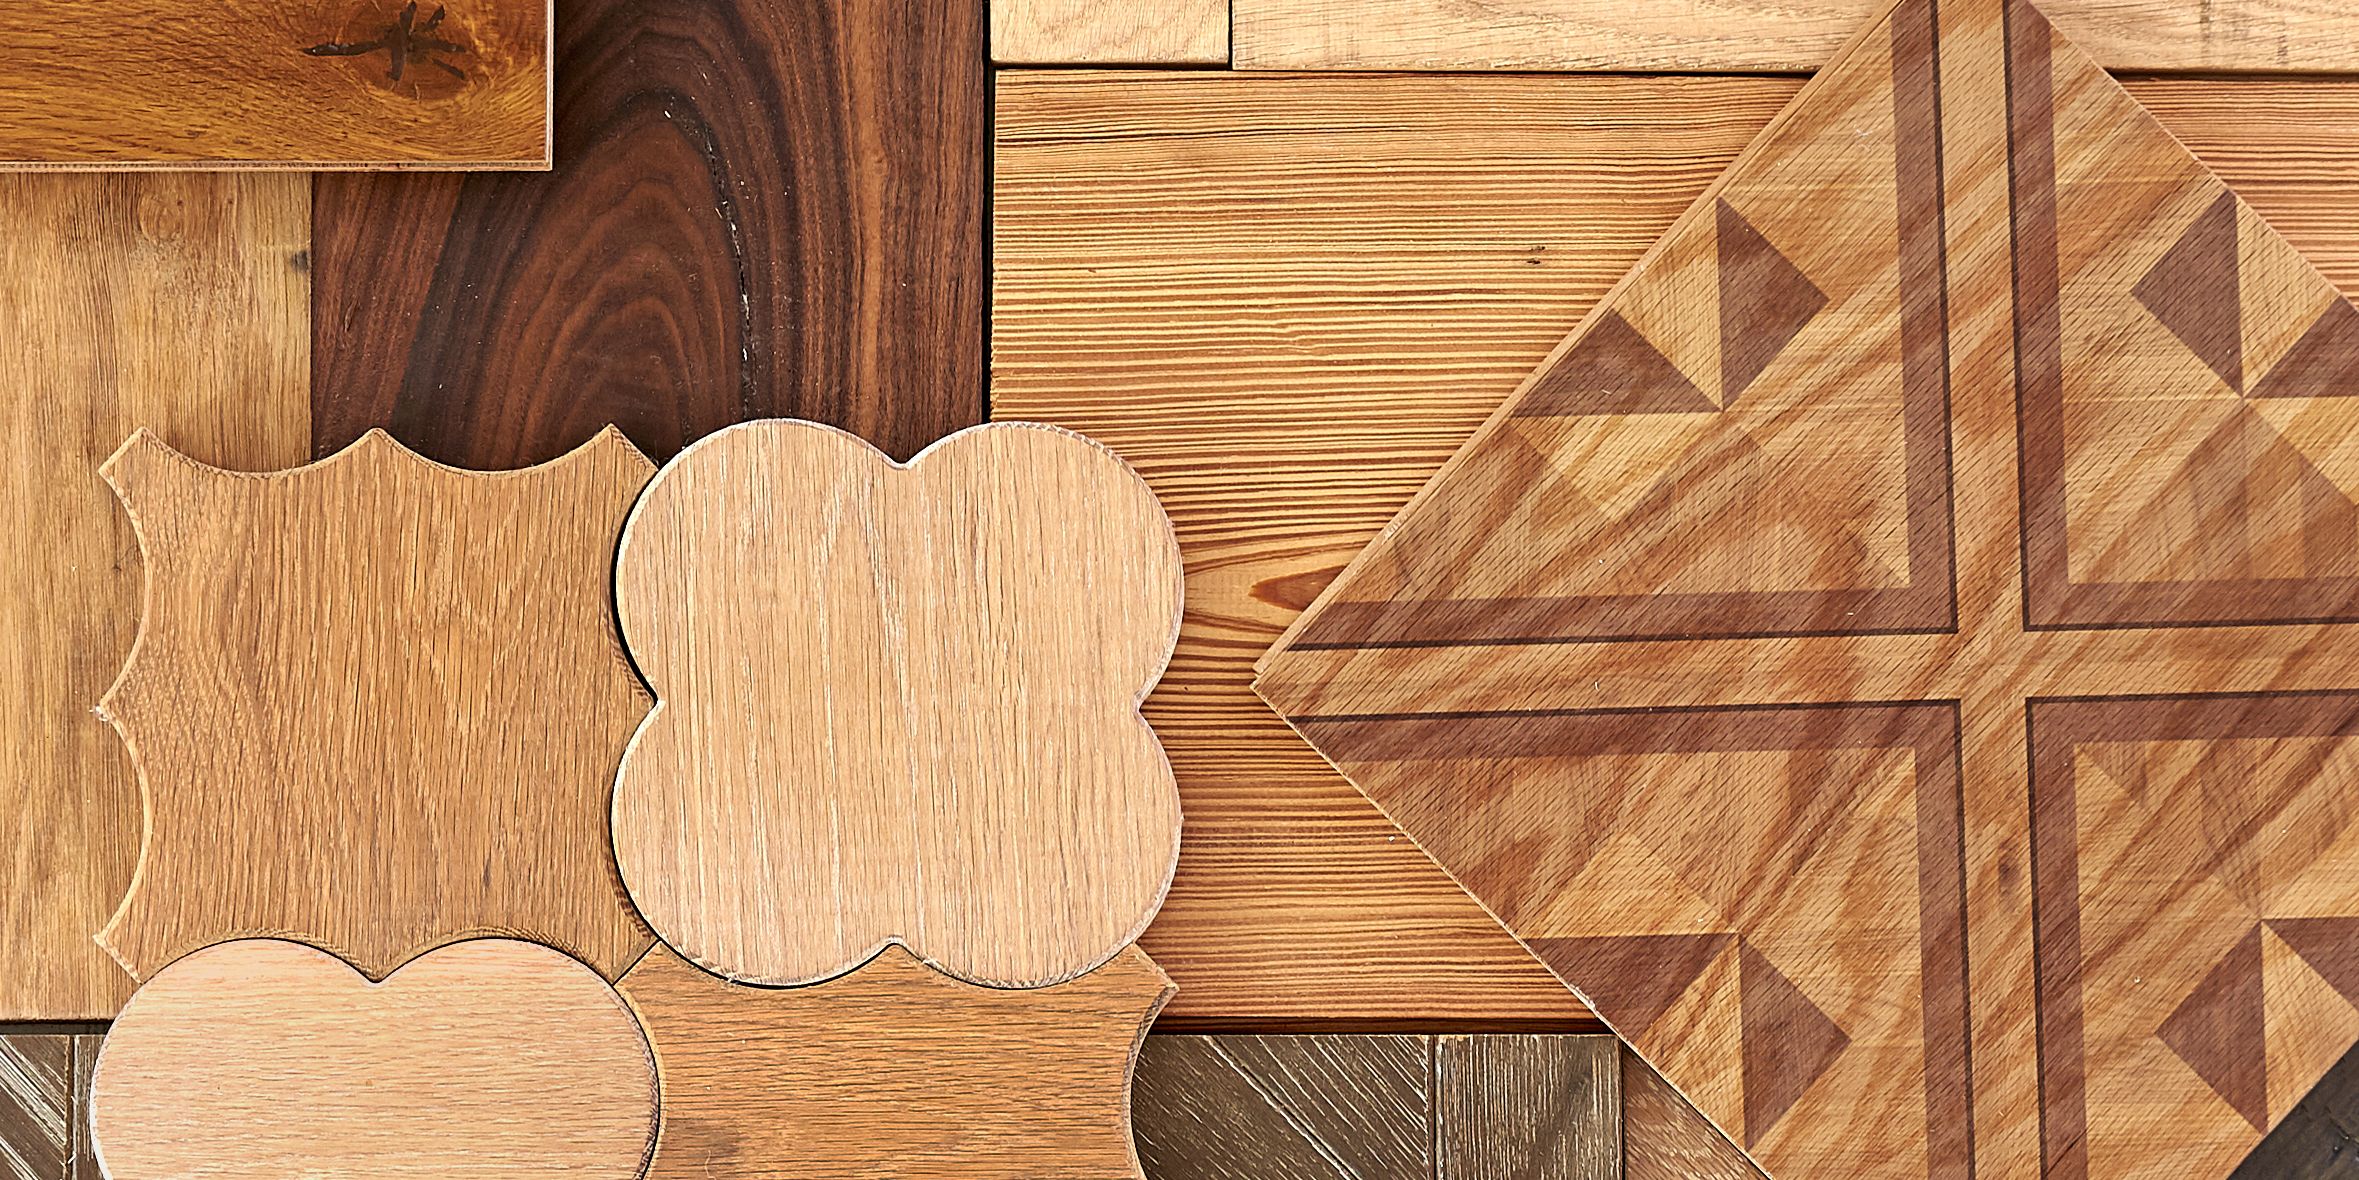 Hardwood Flooring Cost Types Of, Types Of Hardwood Floors